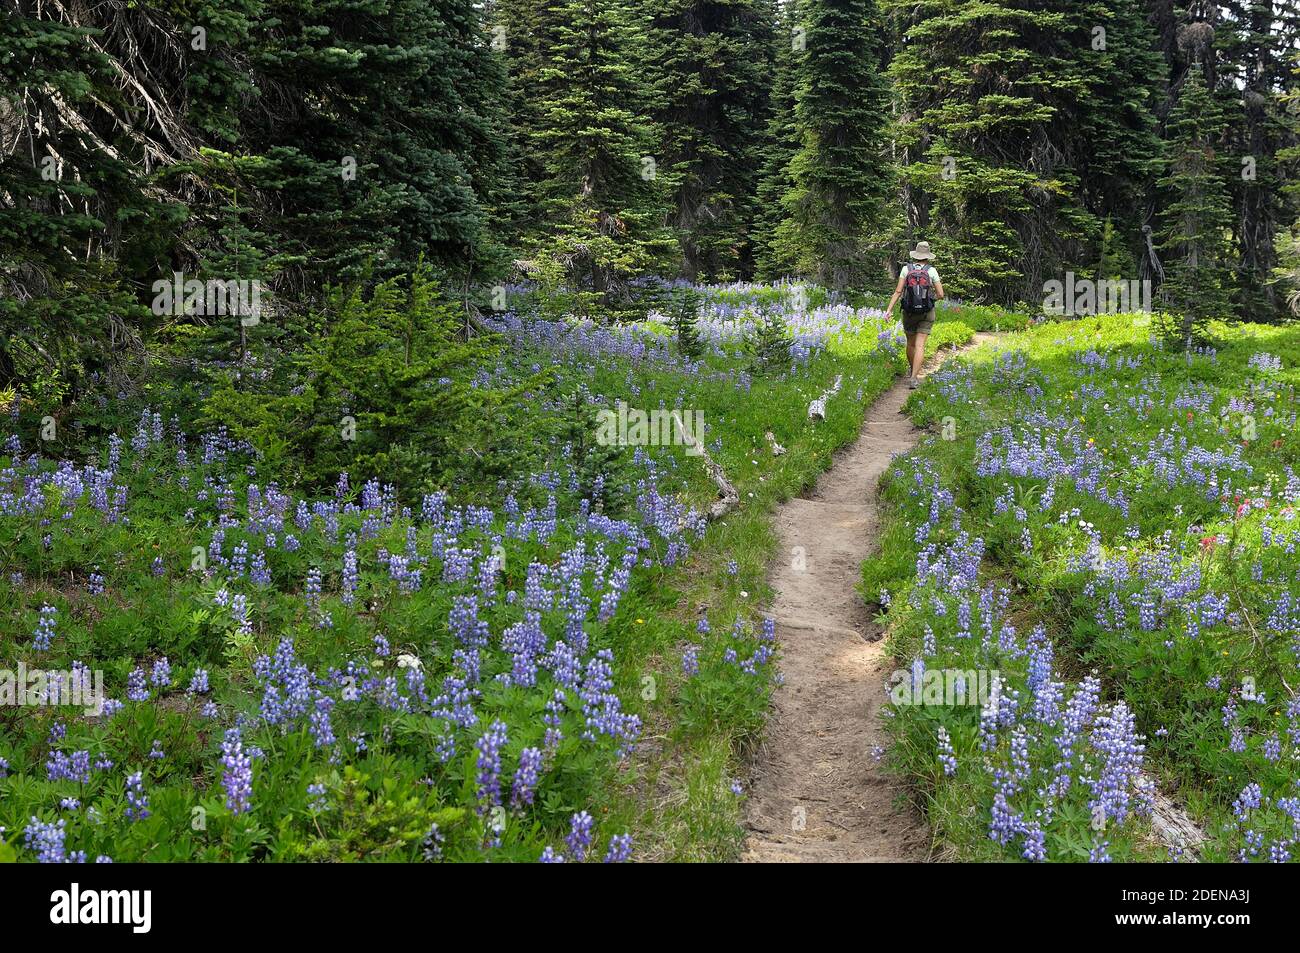 USA, Pacific Northwest, Washington,Cascades, Gifford Pinchot National Forest, Mount Adams, Killen Creek Trail, wildflowers and hiker Stock Photo